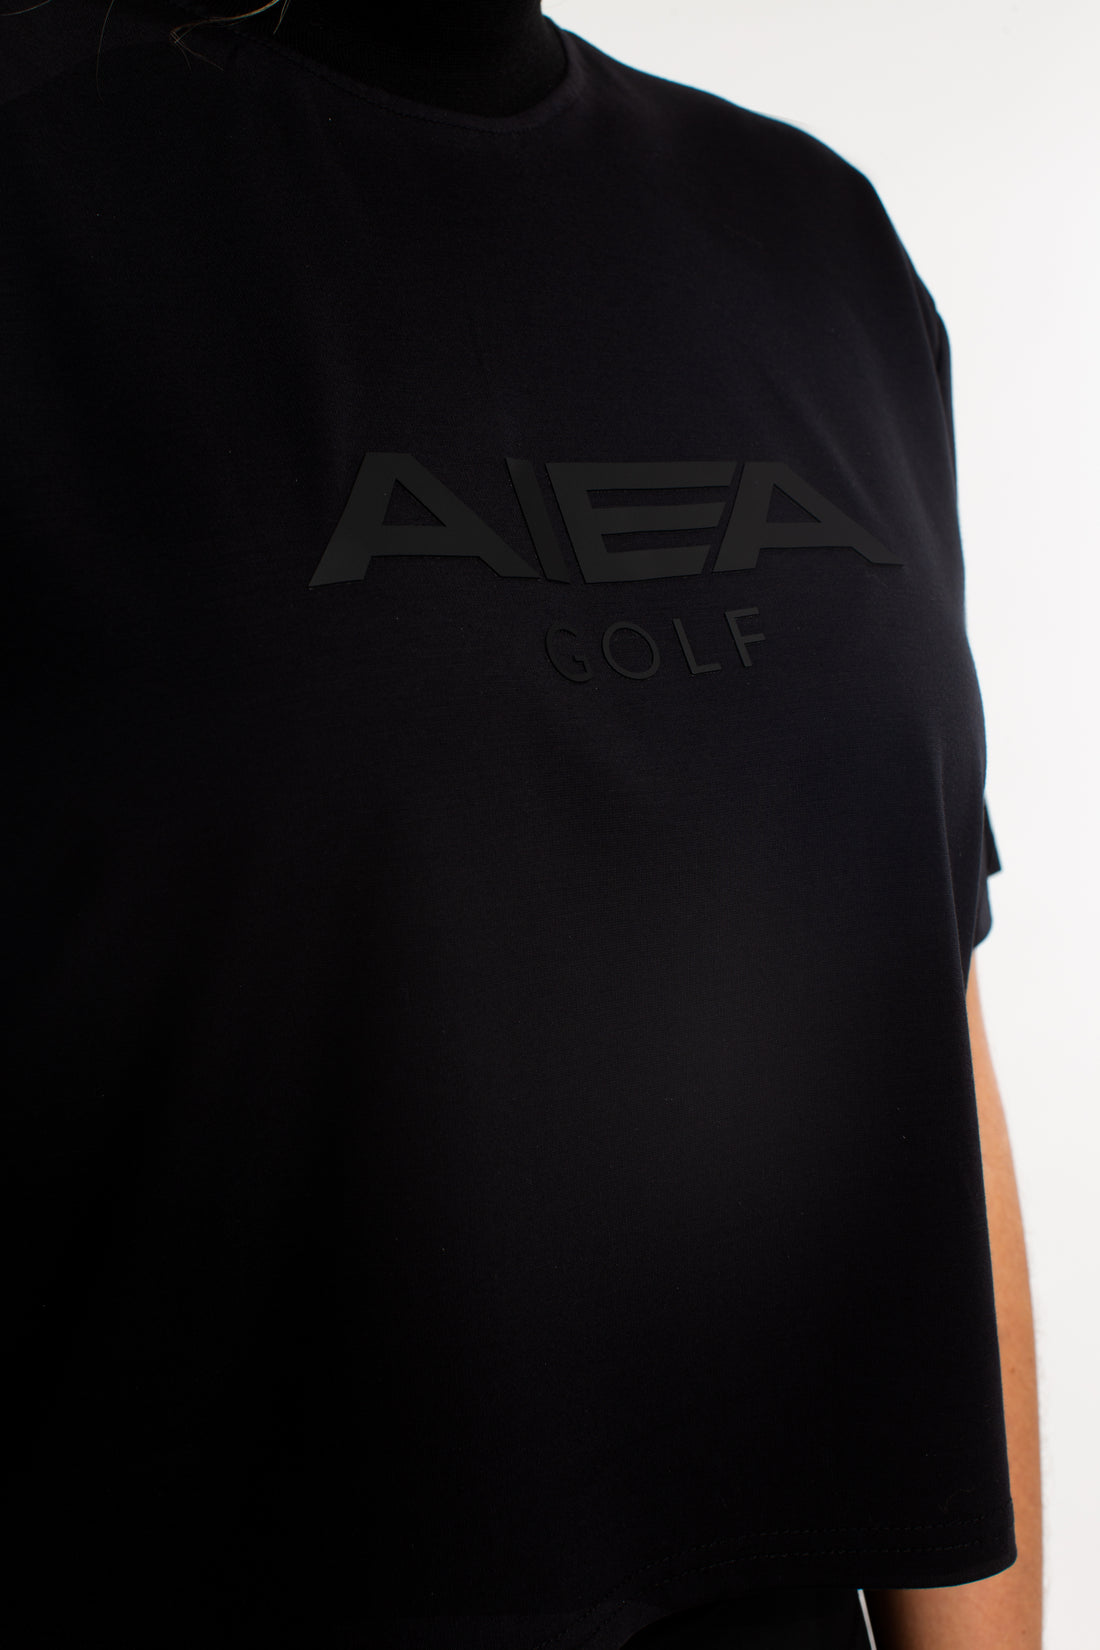 AIEA Golf cropped mock neck logo tee in black